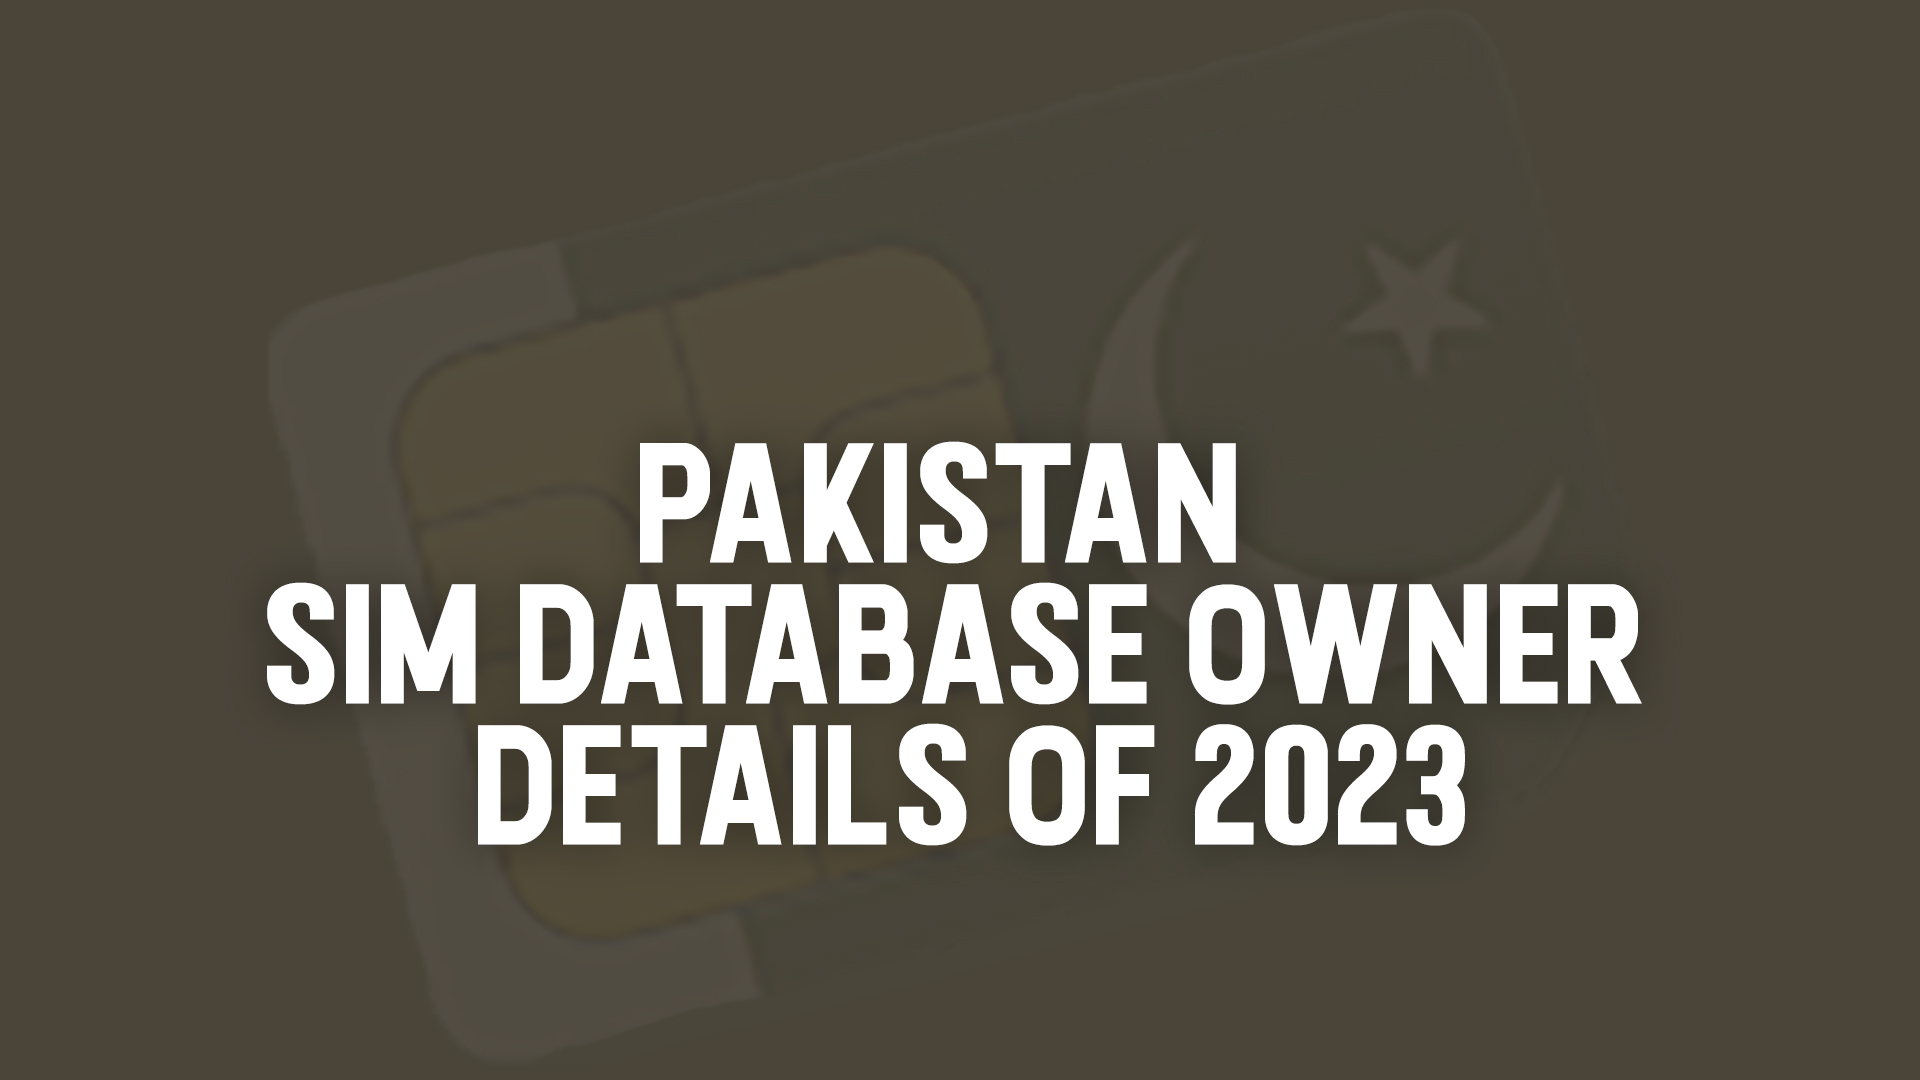 Pakistan SIM Database Owner Details of 2023: